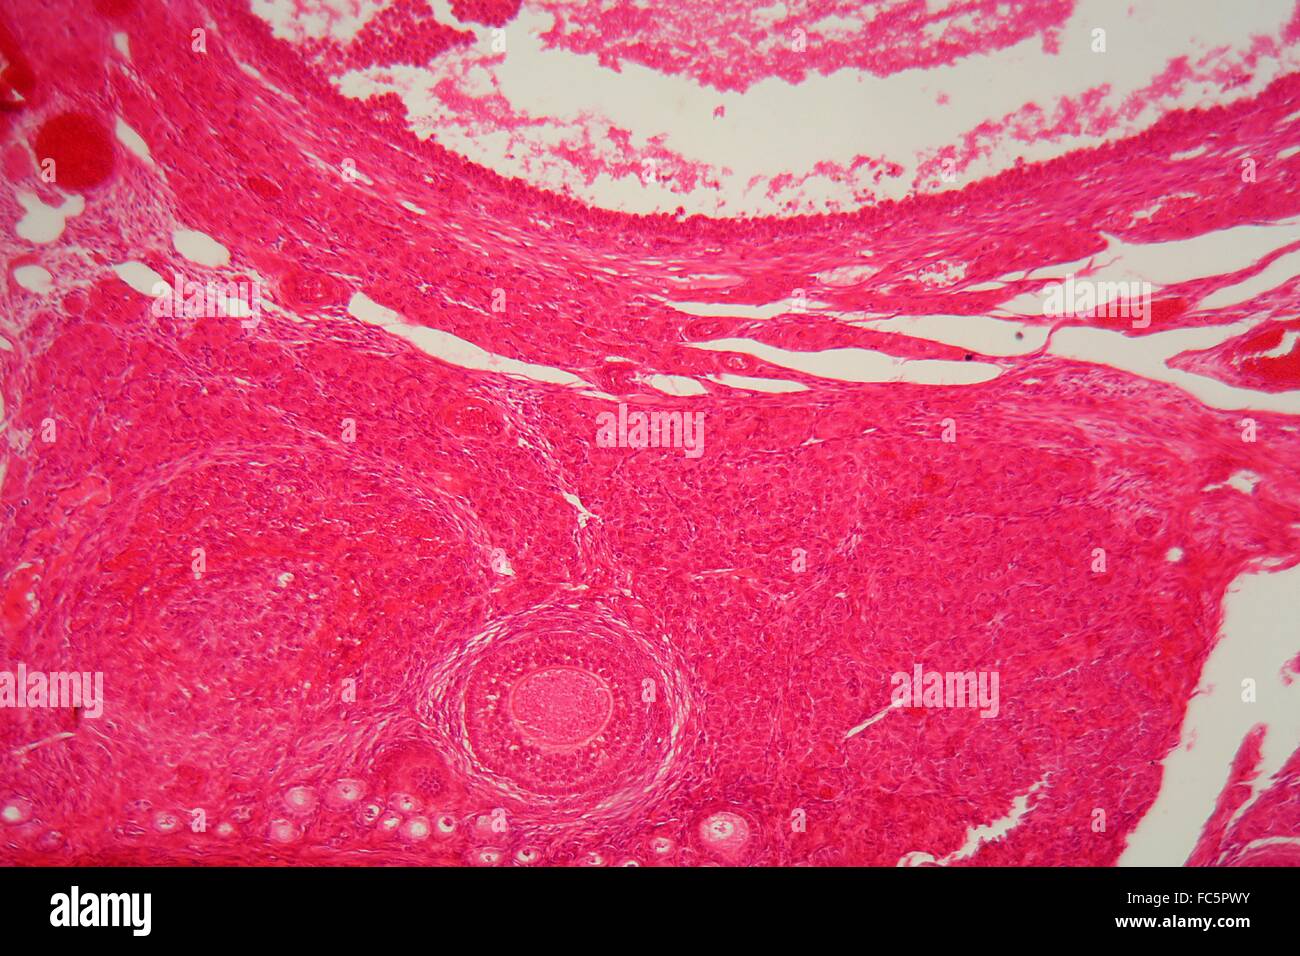 Ovary tissue under the microscope. Stock Photo